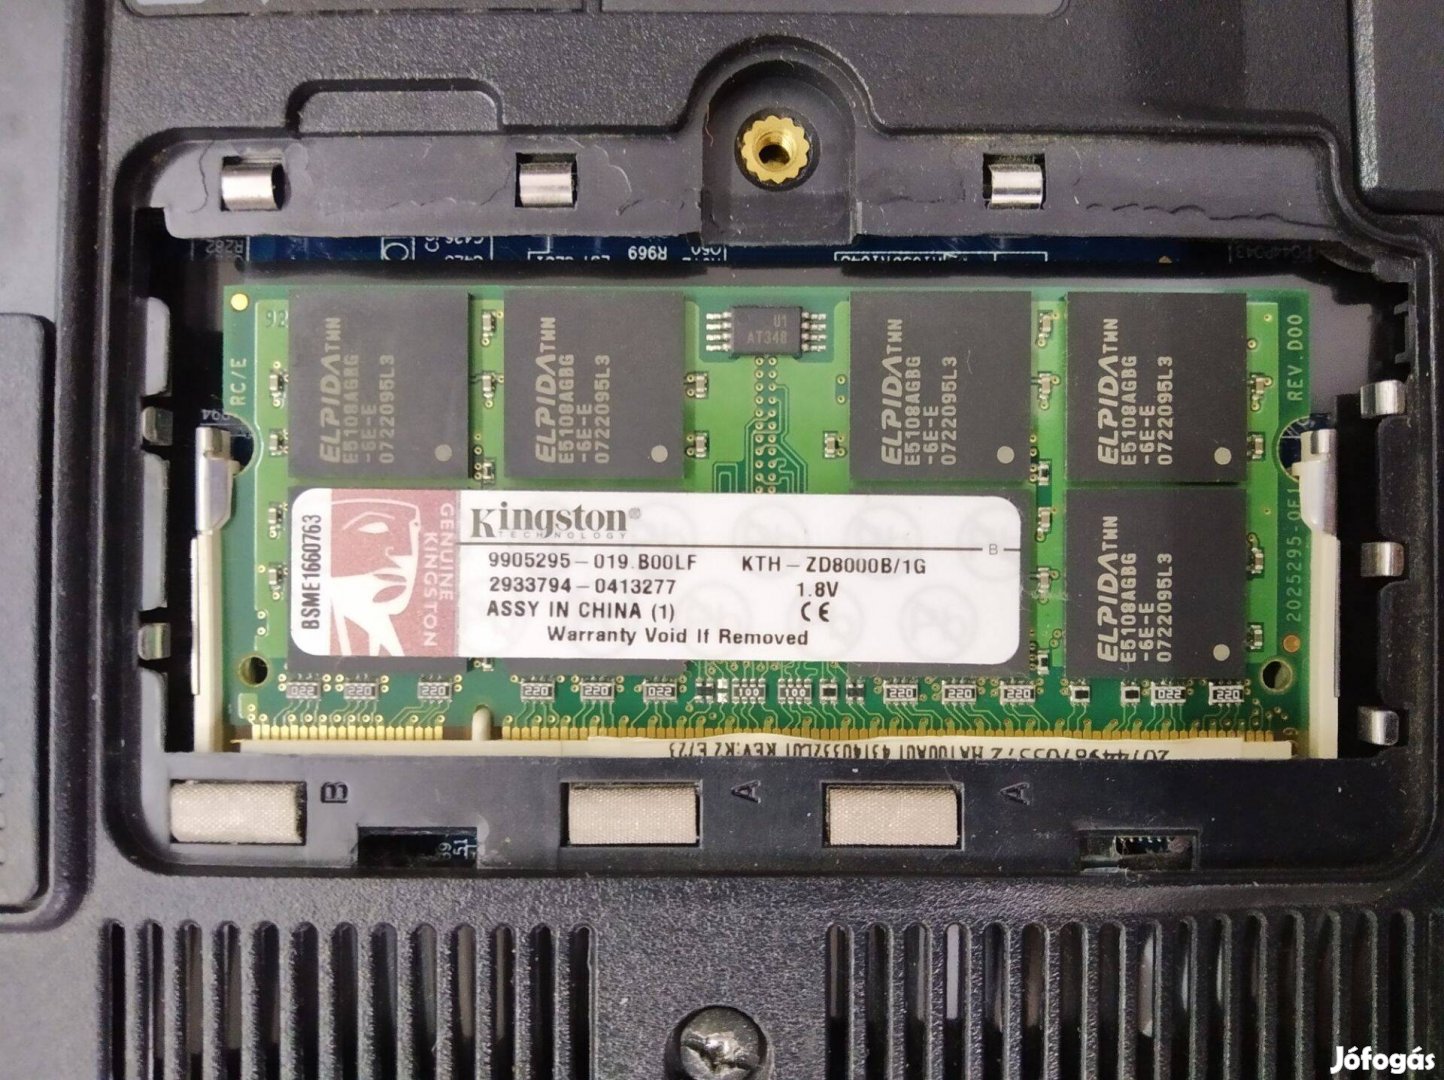 1GB DDR2 200-Pin SO-DIMM PC2-5300S Kingston KTH-ZD8000B/1G 9905295